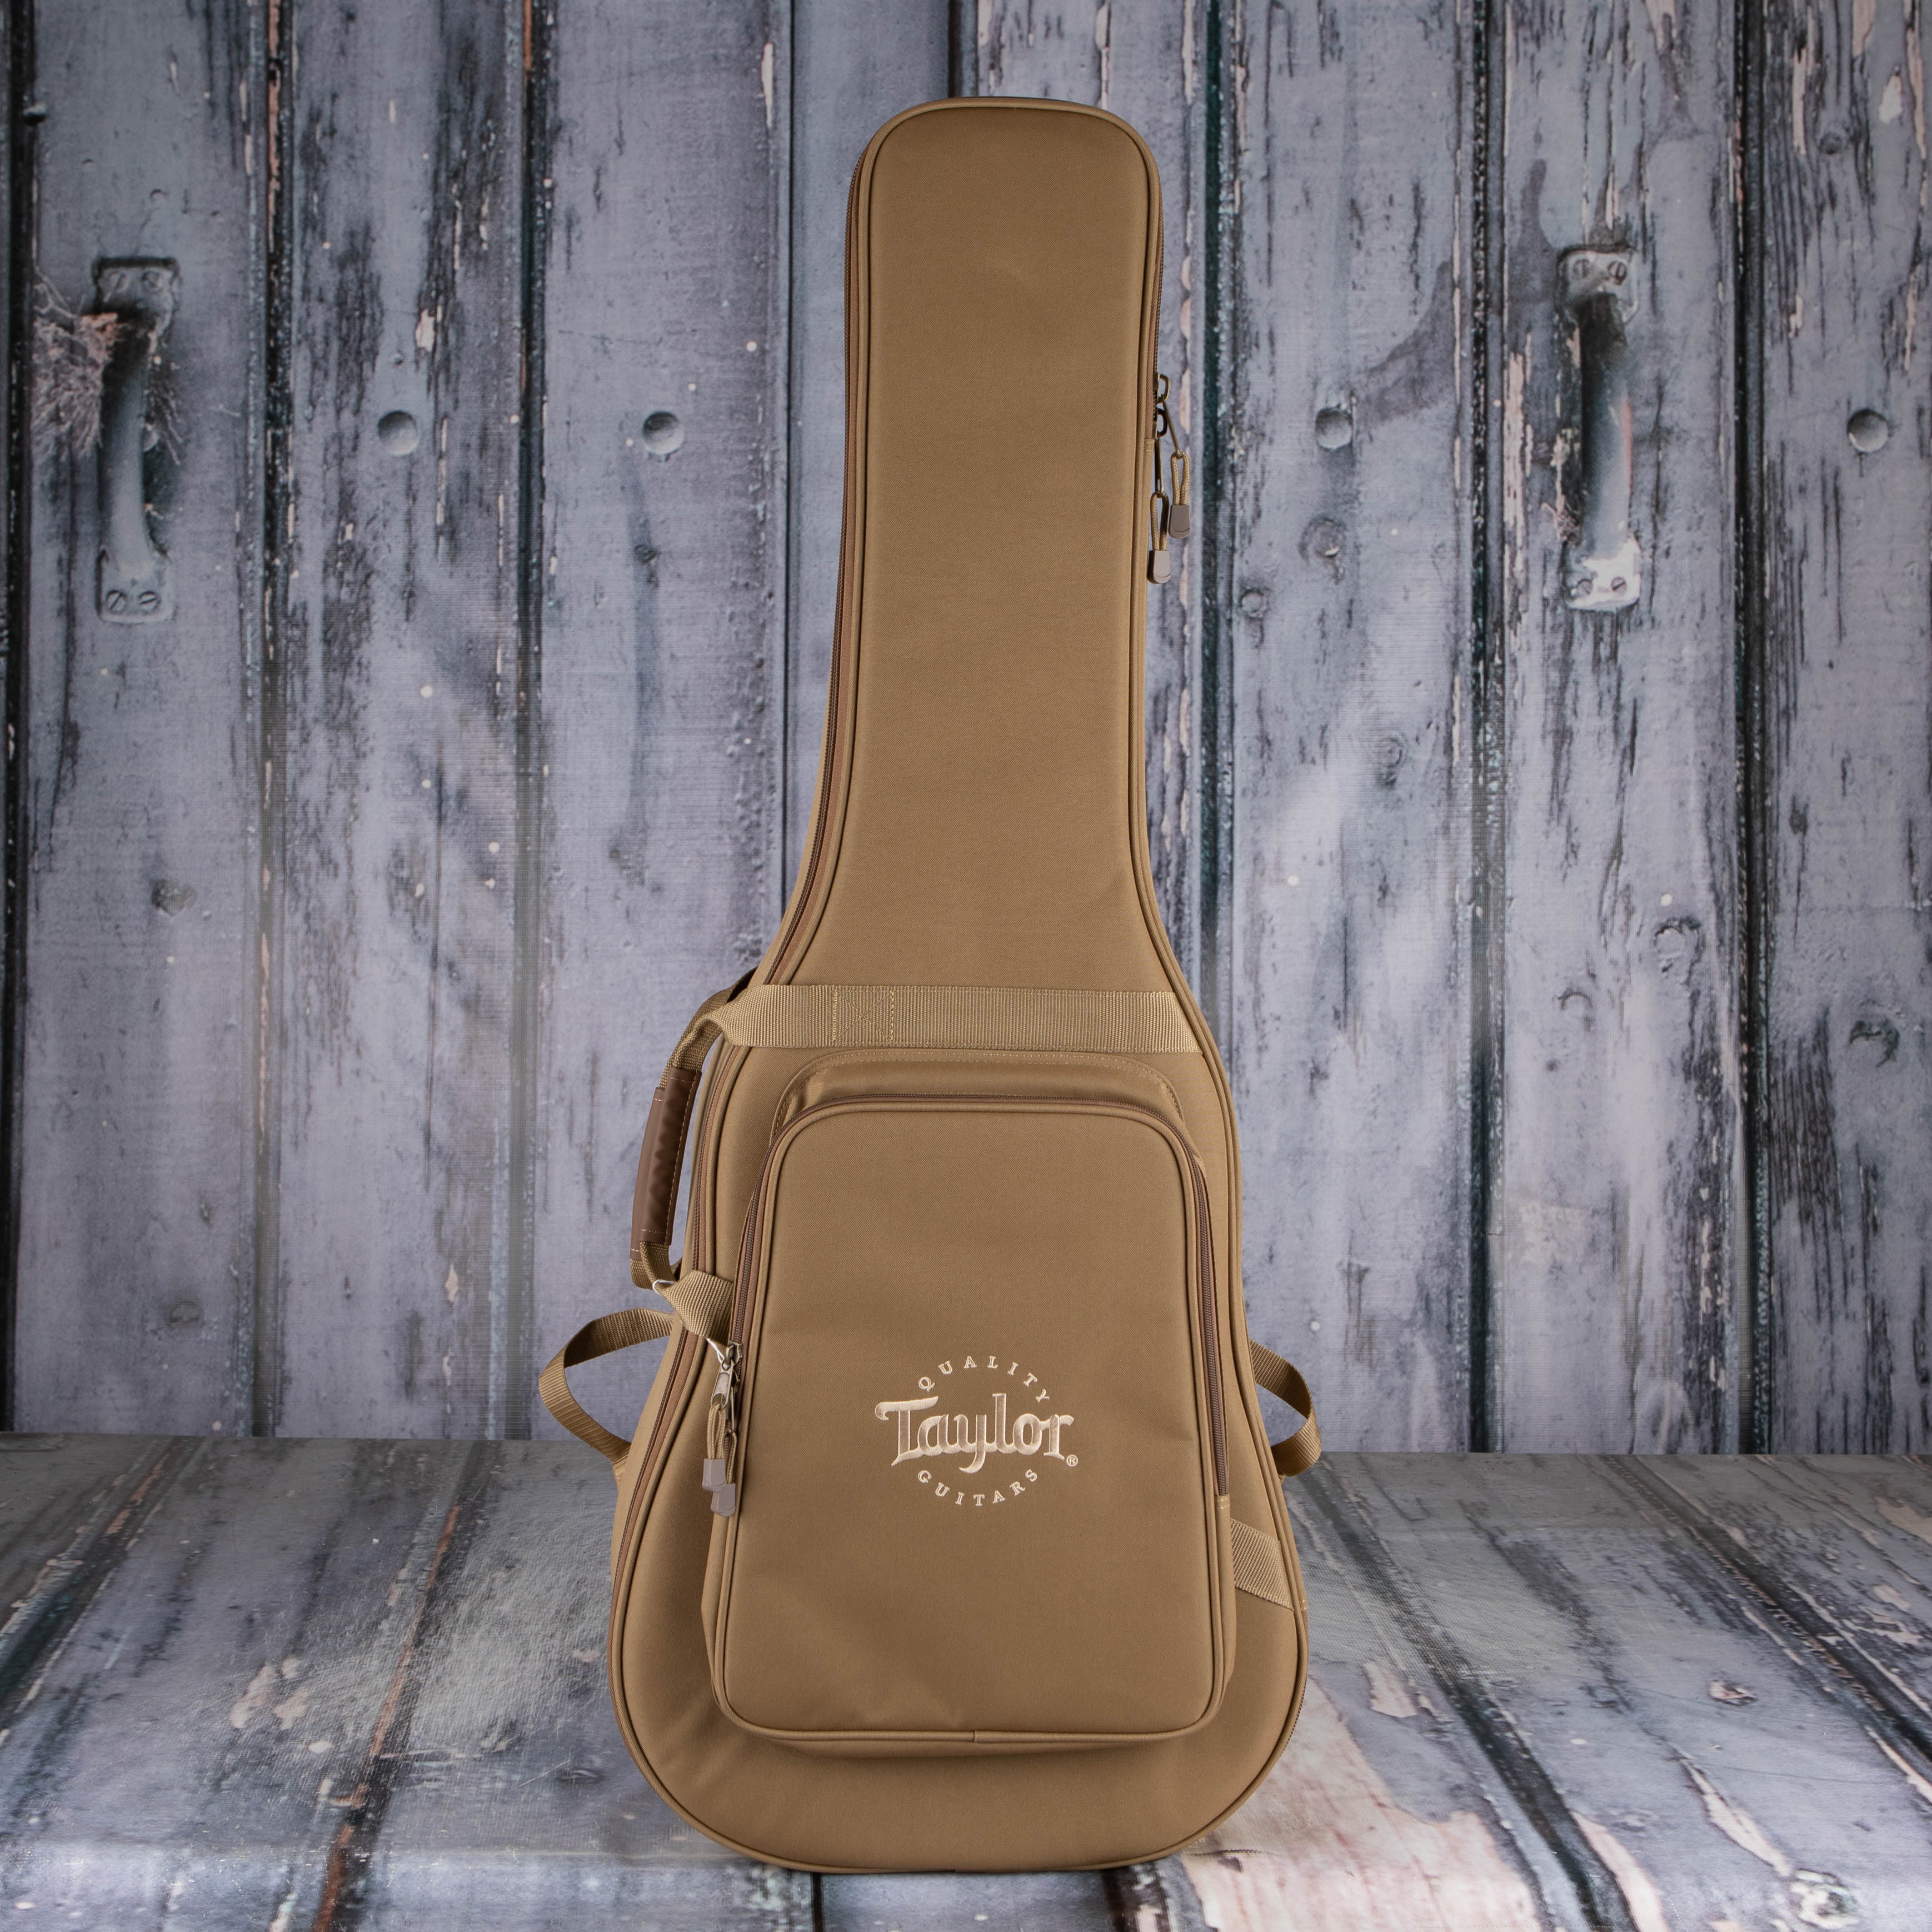 Taylor 150ce 12-String Acoustic/Electric Guitar, Natural, bag